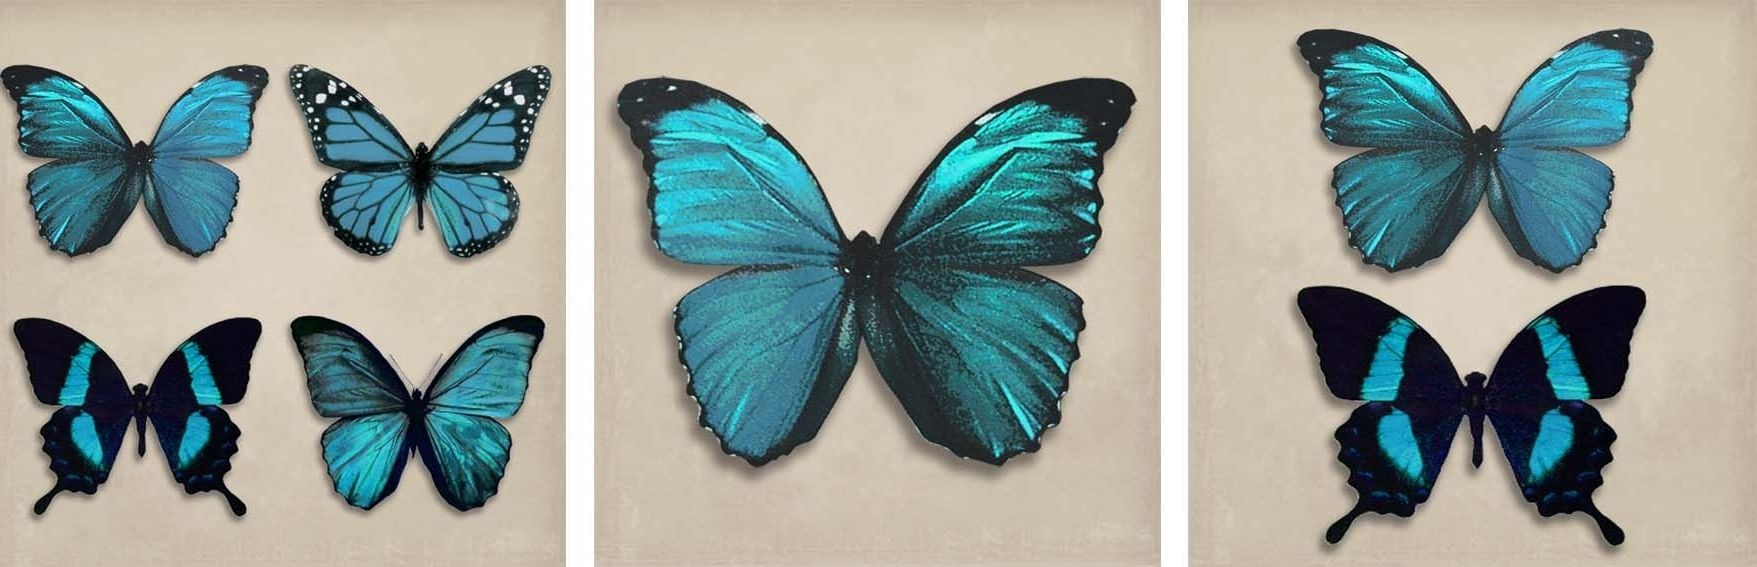 Teal Butterflies Set Of 3 Canvasesarthouse : Wallpaper Direct Regarding Recent Butterfly Canvas Wall Art (View 6 of 15)